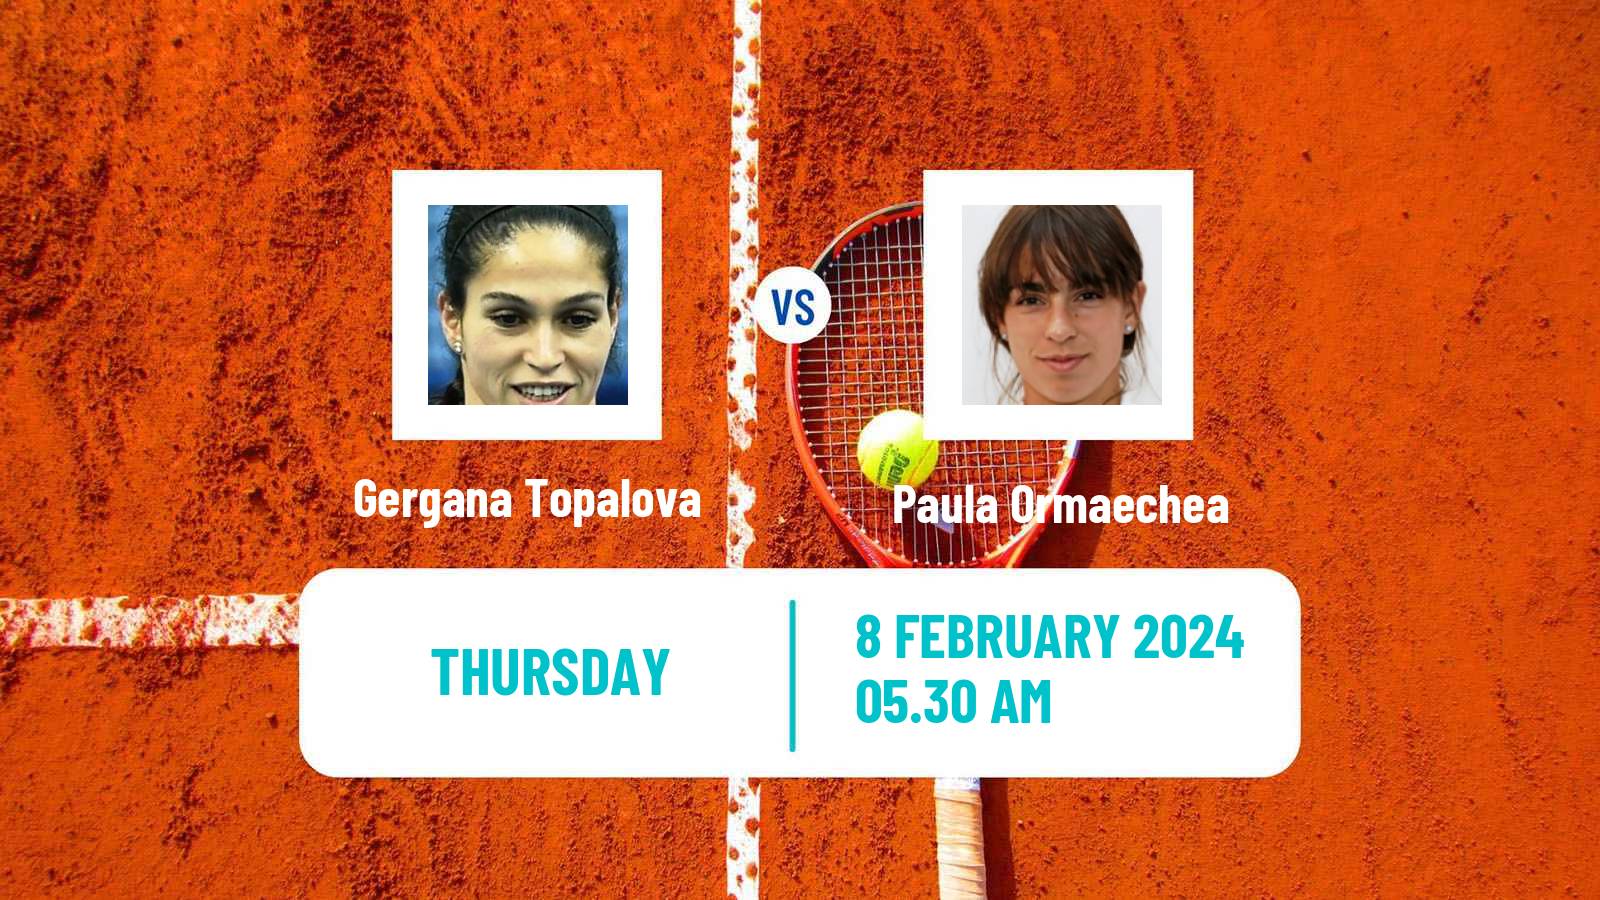 Tennis ITF W35 Antalya 2 Women Gergana Topalova - Paula Ormaechea